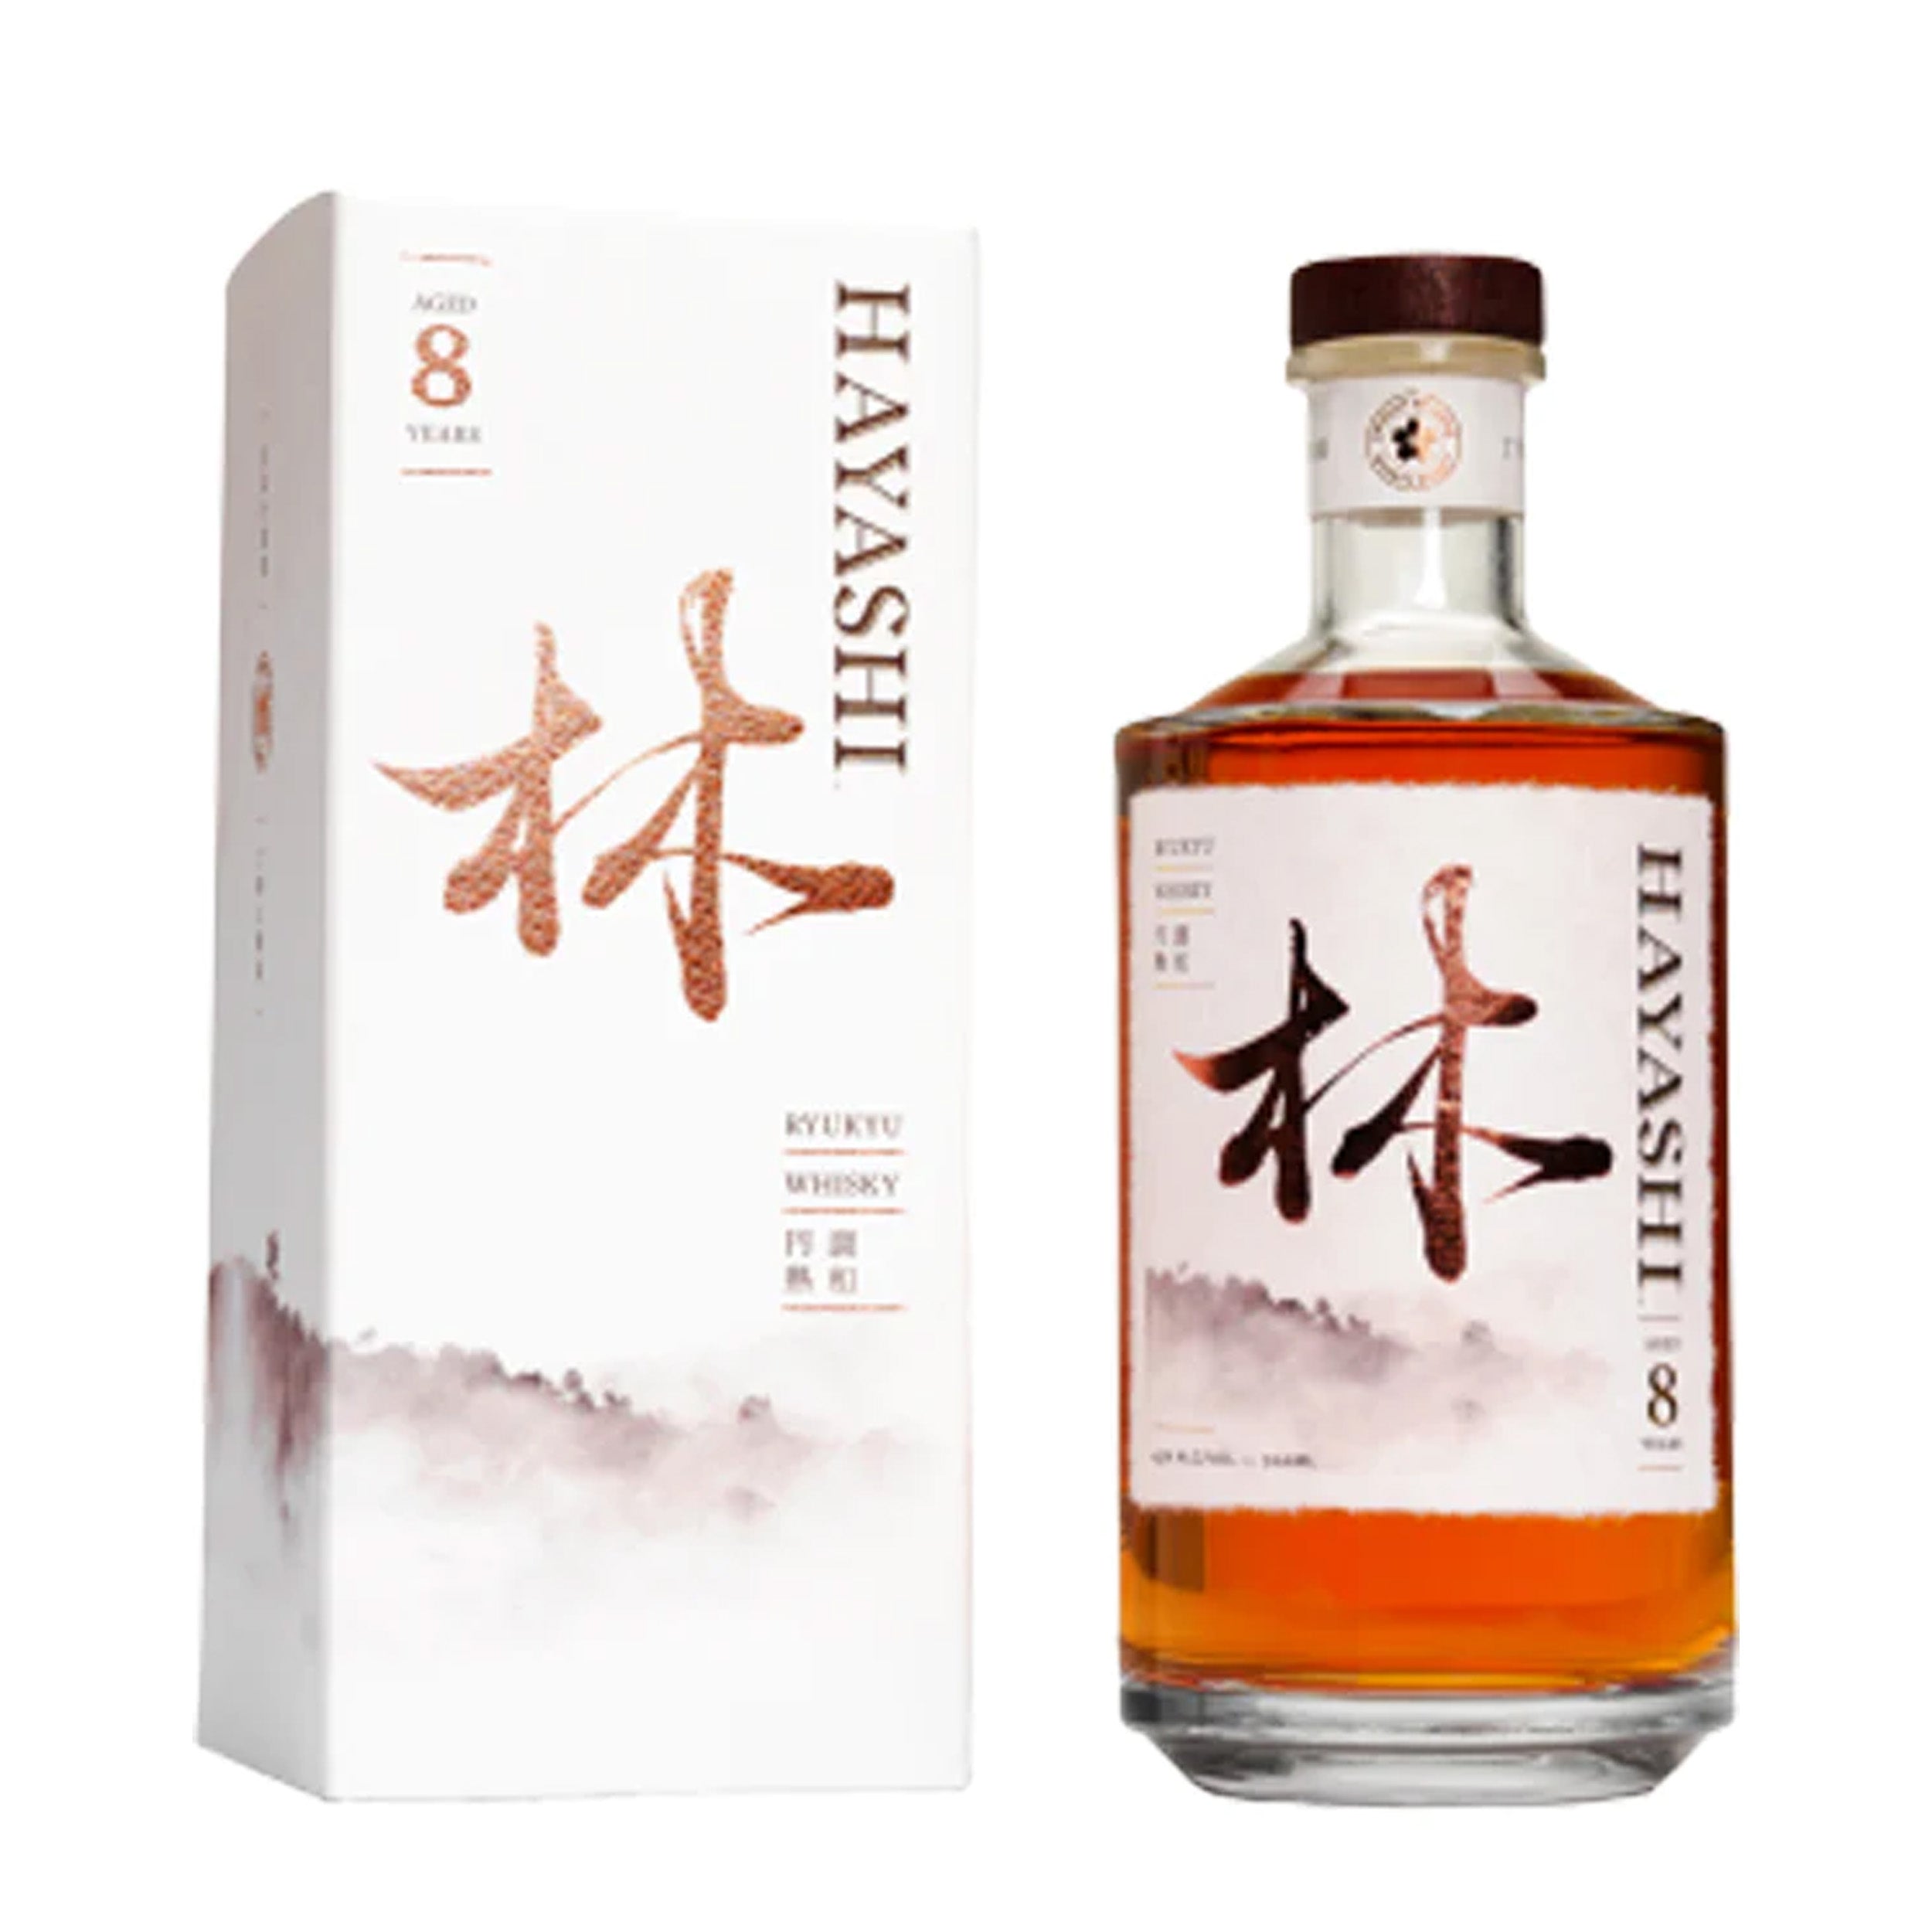 Hayashi 8 Year Ryukyu Japanese Whisky